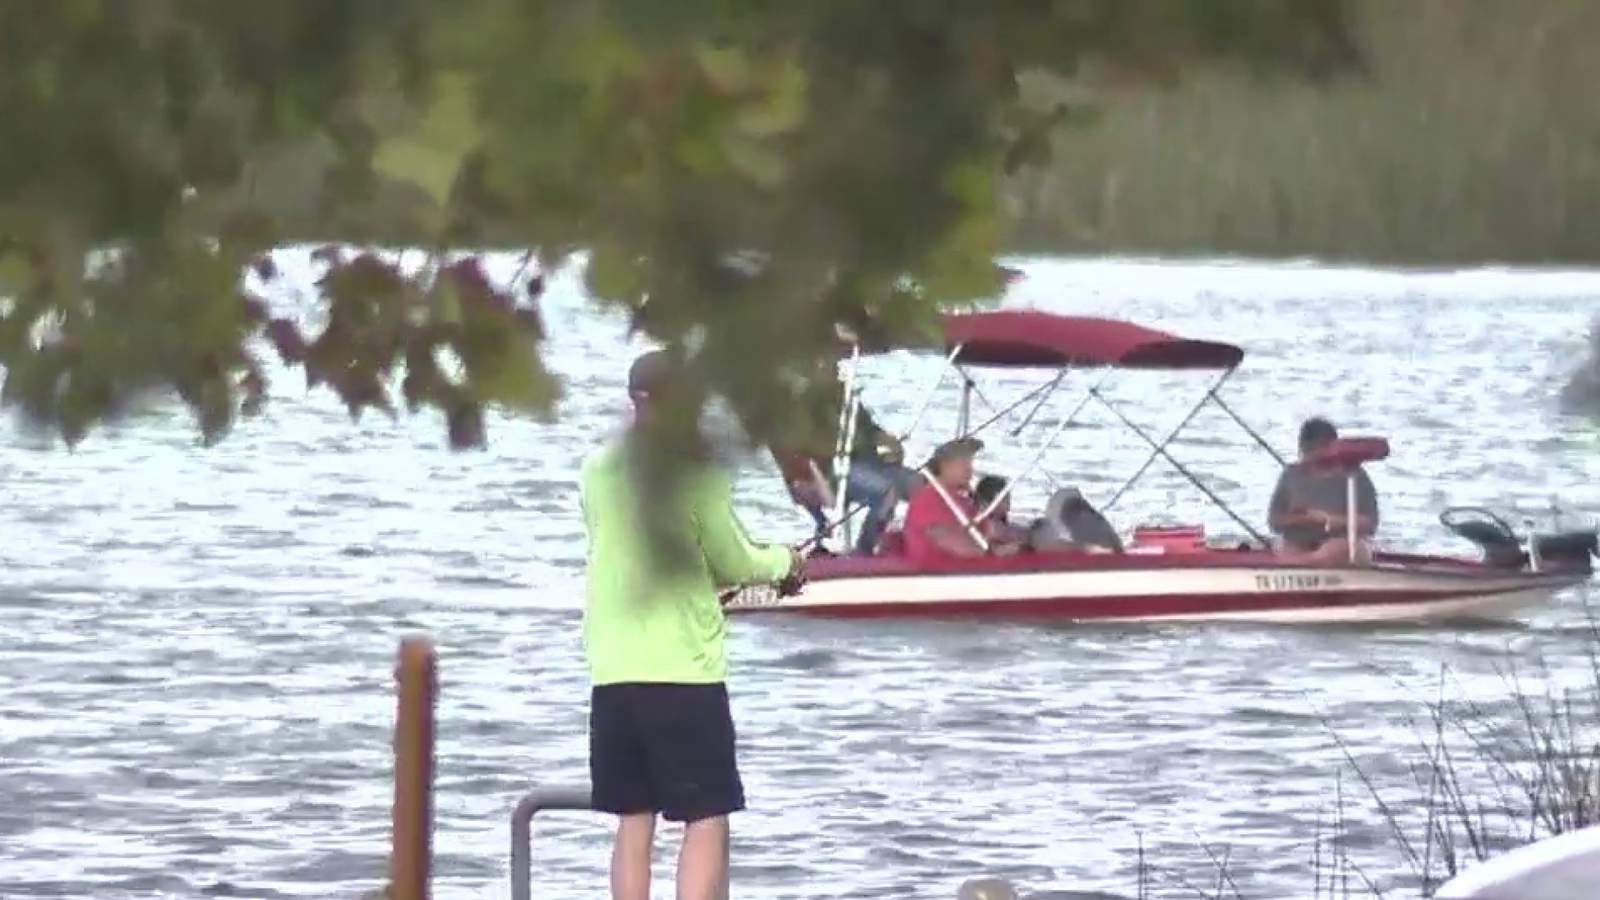 Man transported to hospital after kayak capsizes at Braunig Lake Park, SAFD says